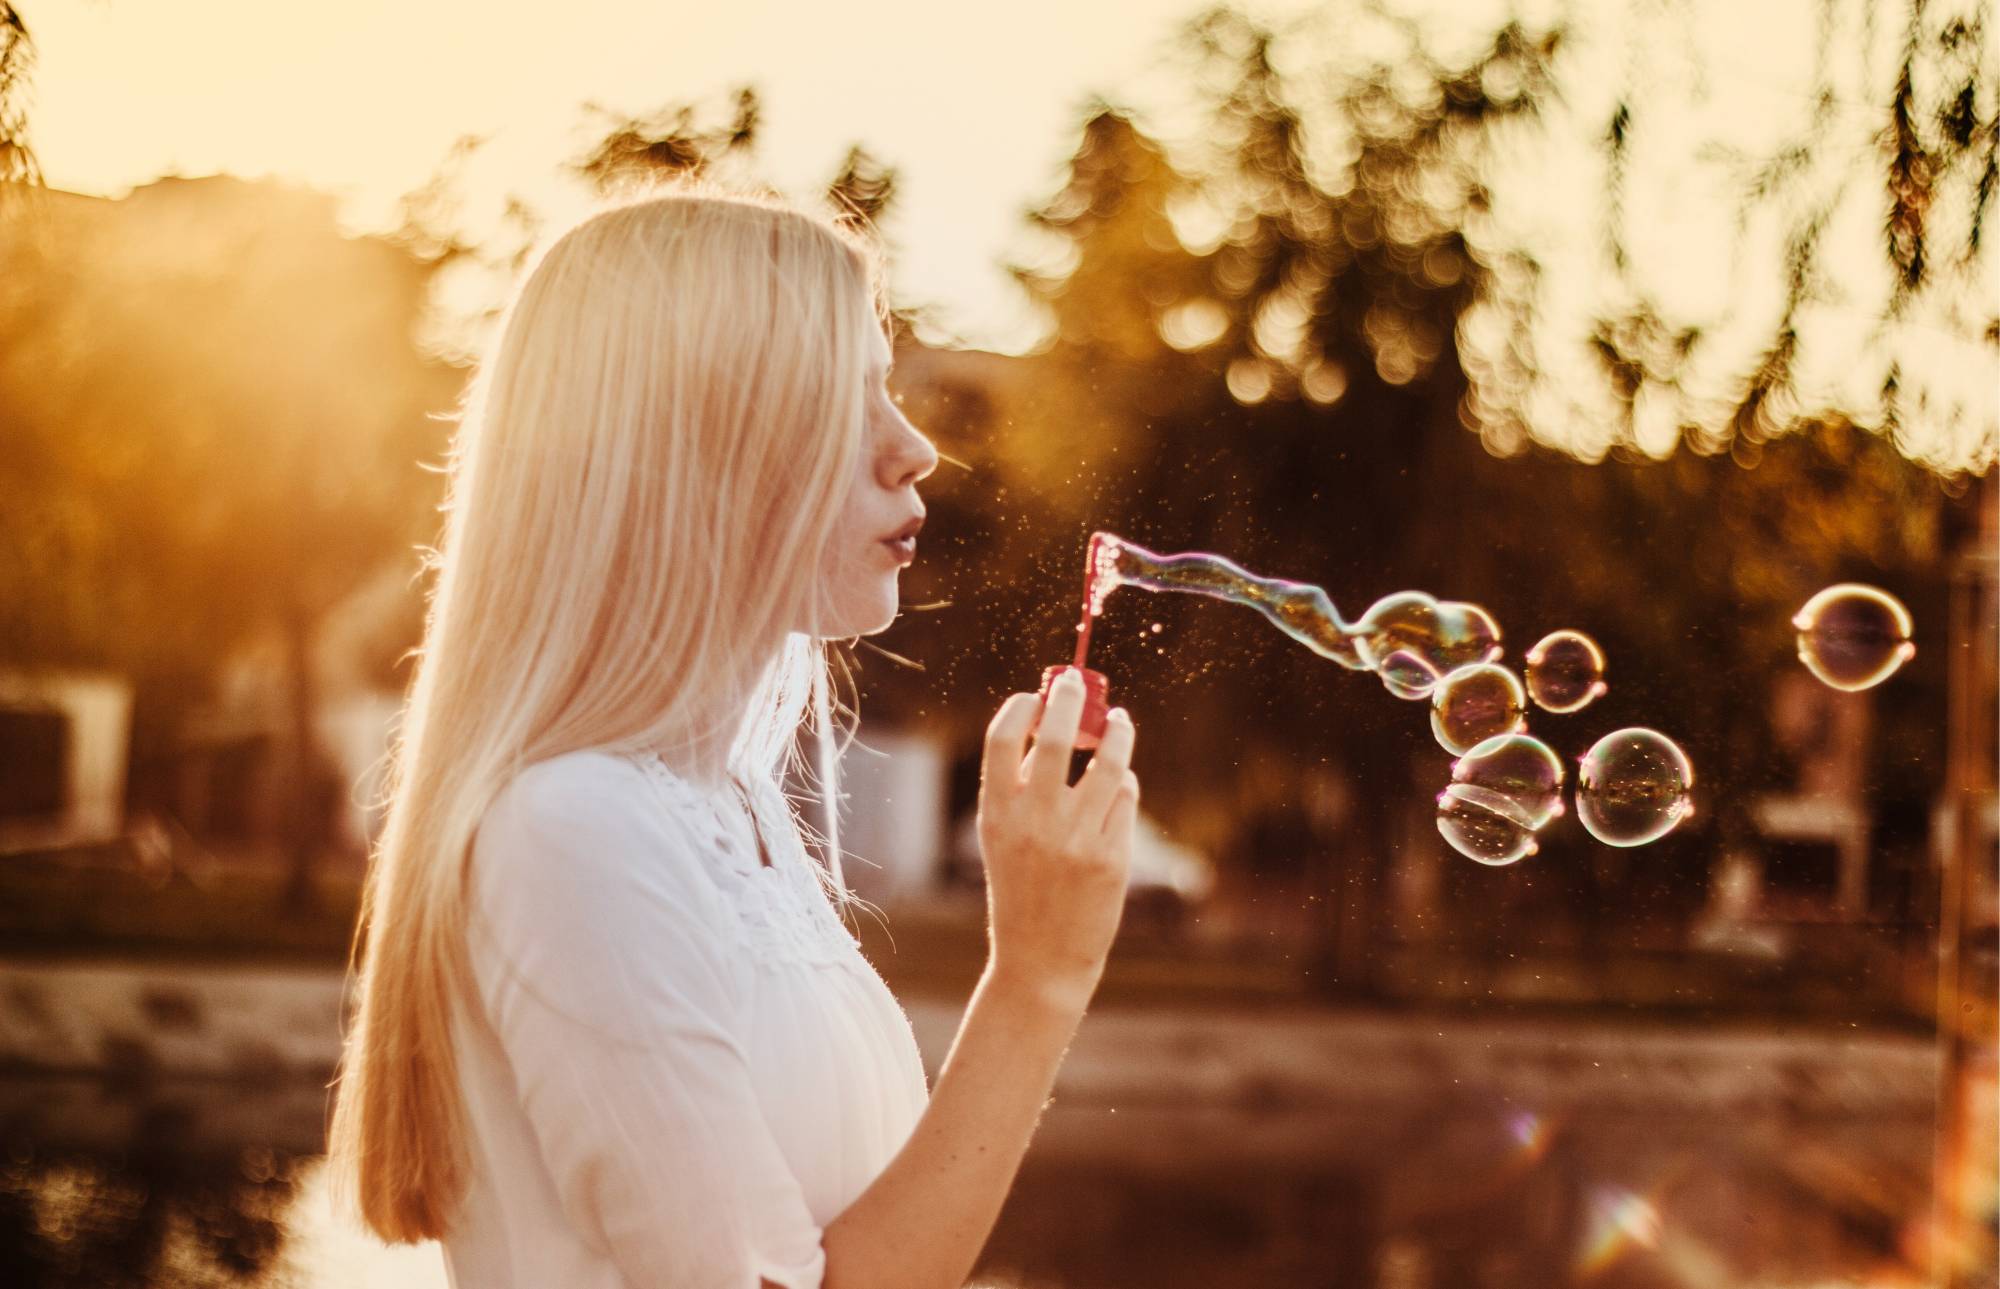 Lady blowing bubbles